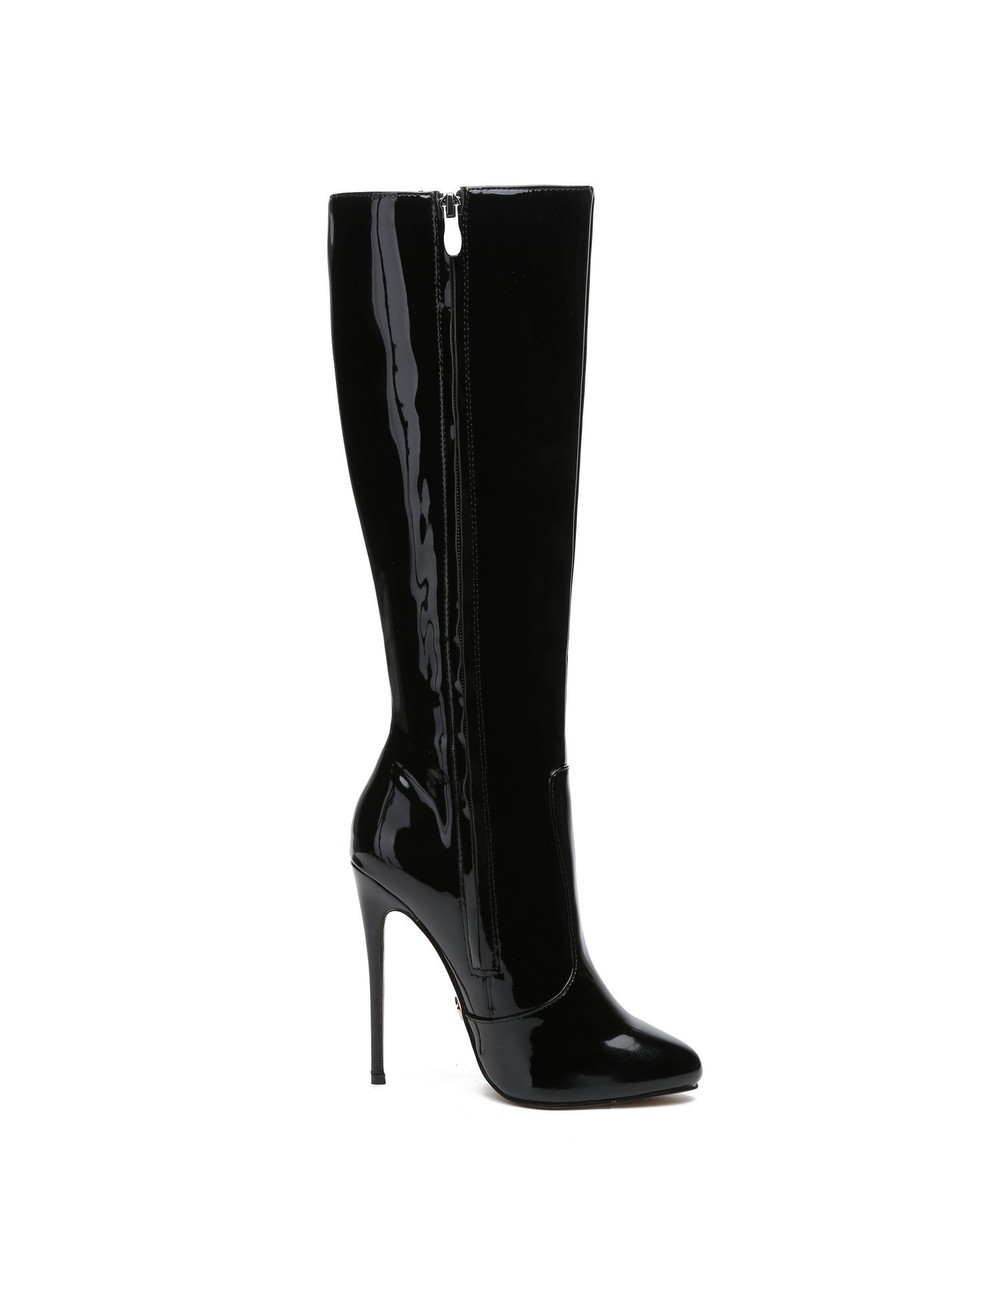 Giaro BRANDY BLACK SHINY KNEE BOOTS - Giaro High Heels | Official store ...